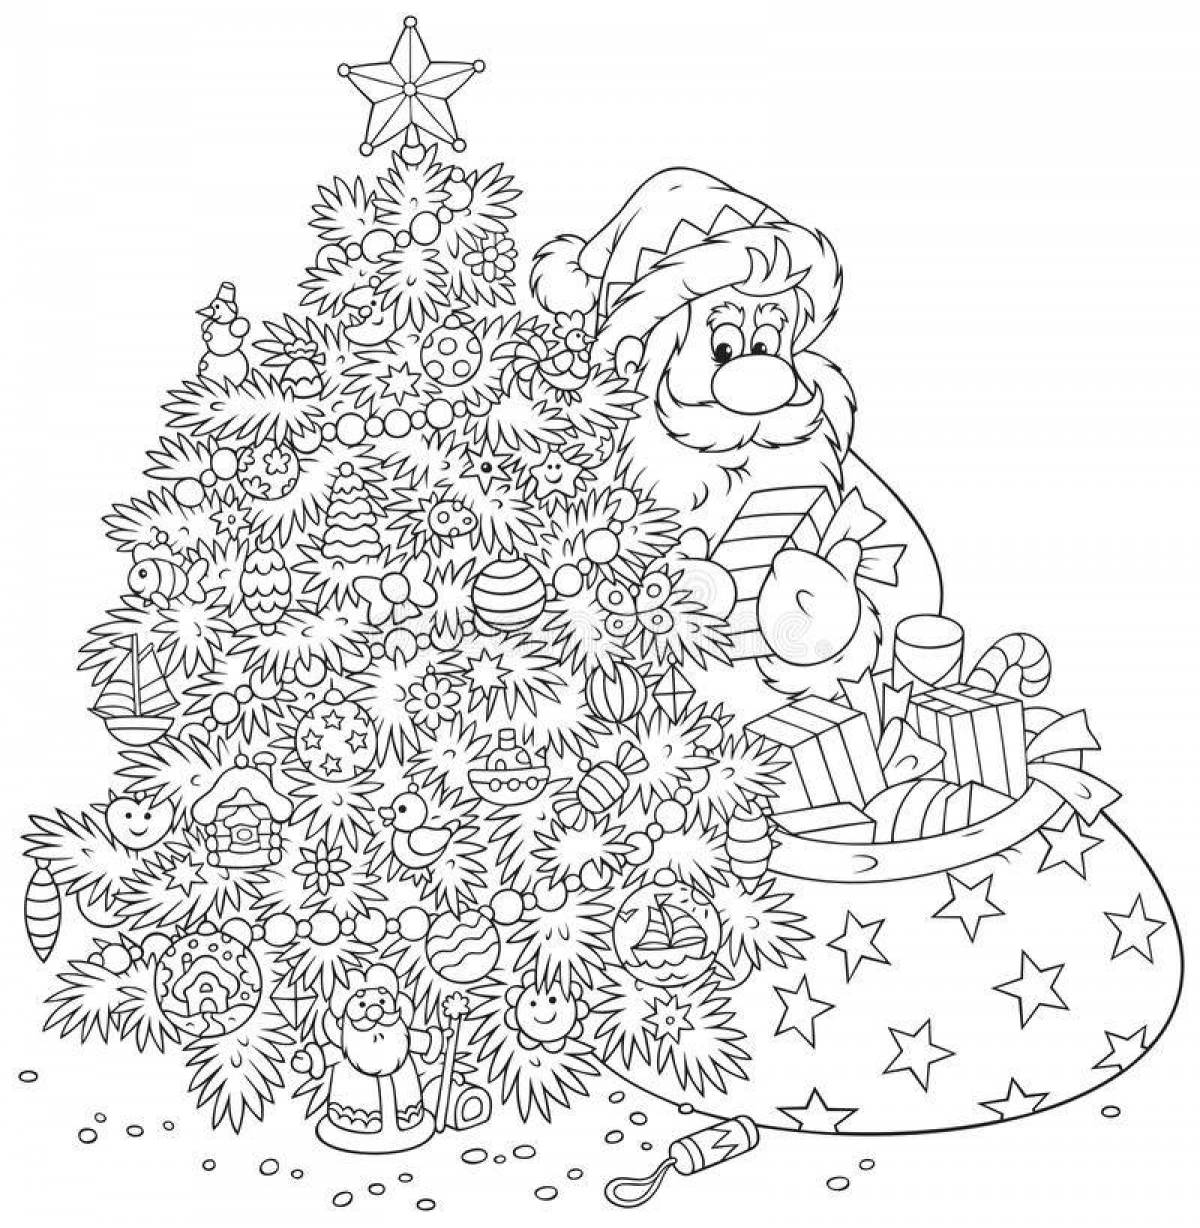 Santa Claus and Christmas tree #7